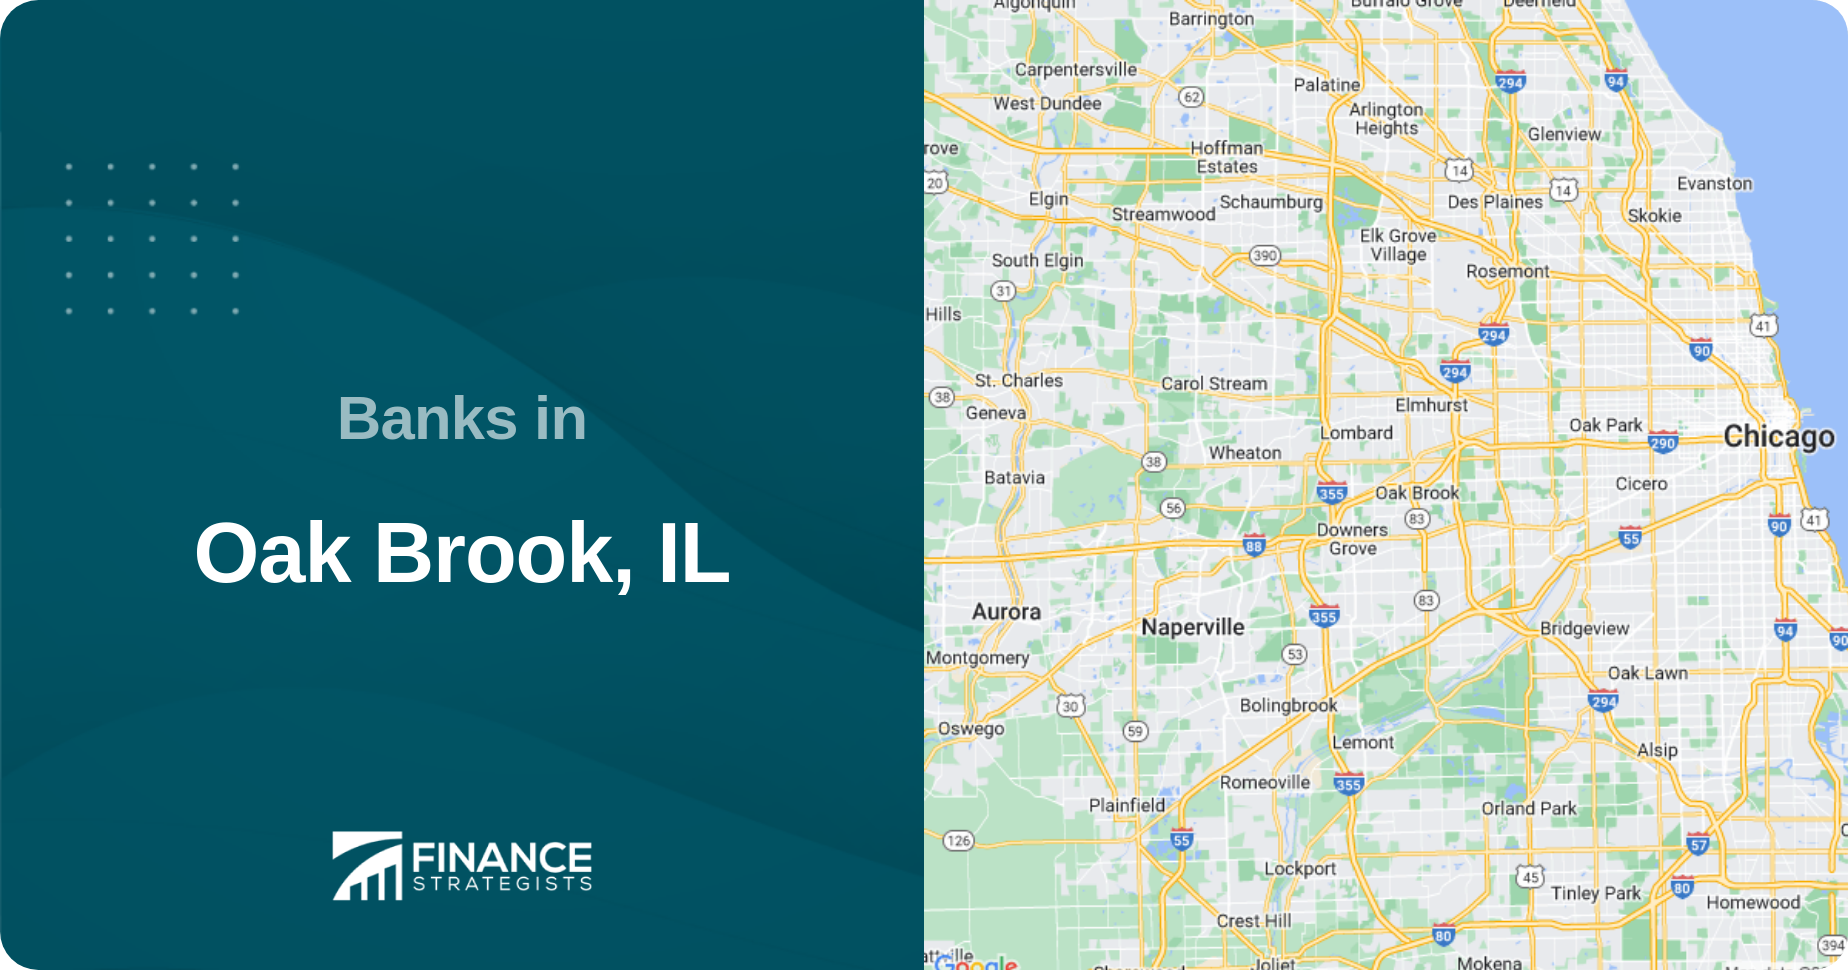 Banks in Oak Brook, IL